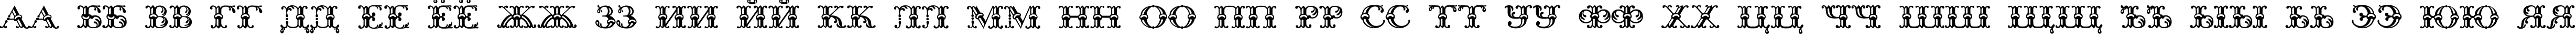 Пример написания русского алфавита шрифтом Bodoni Initials